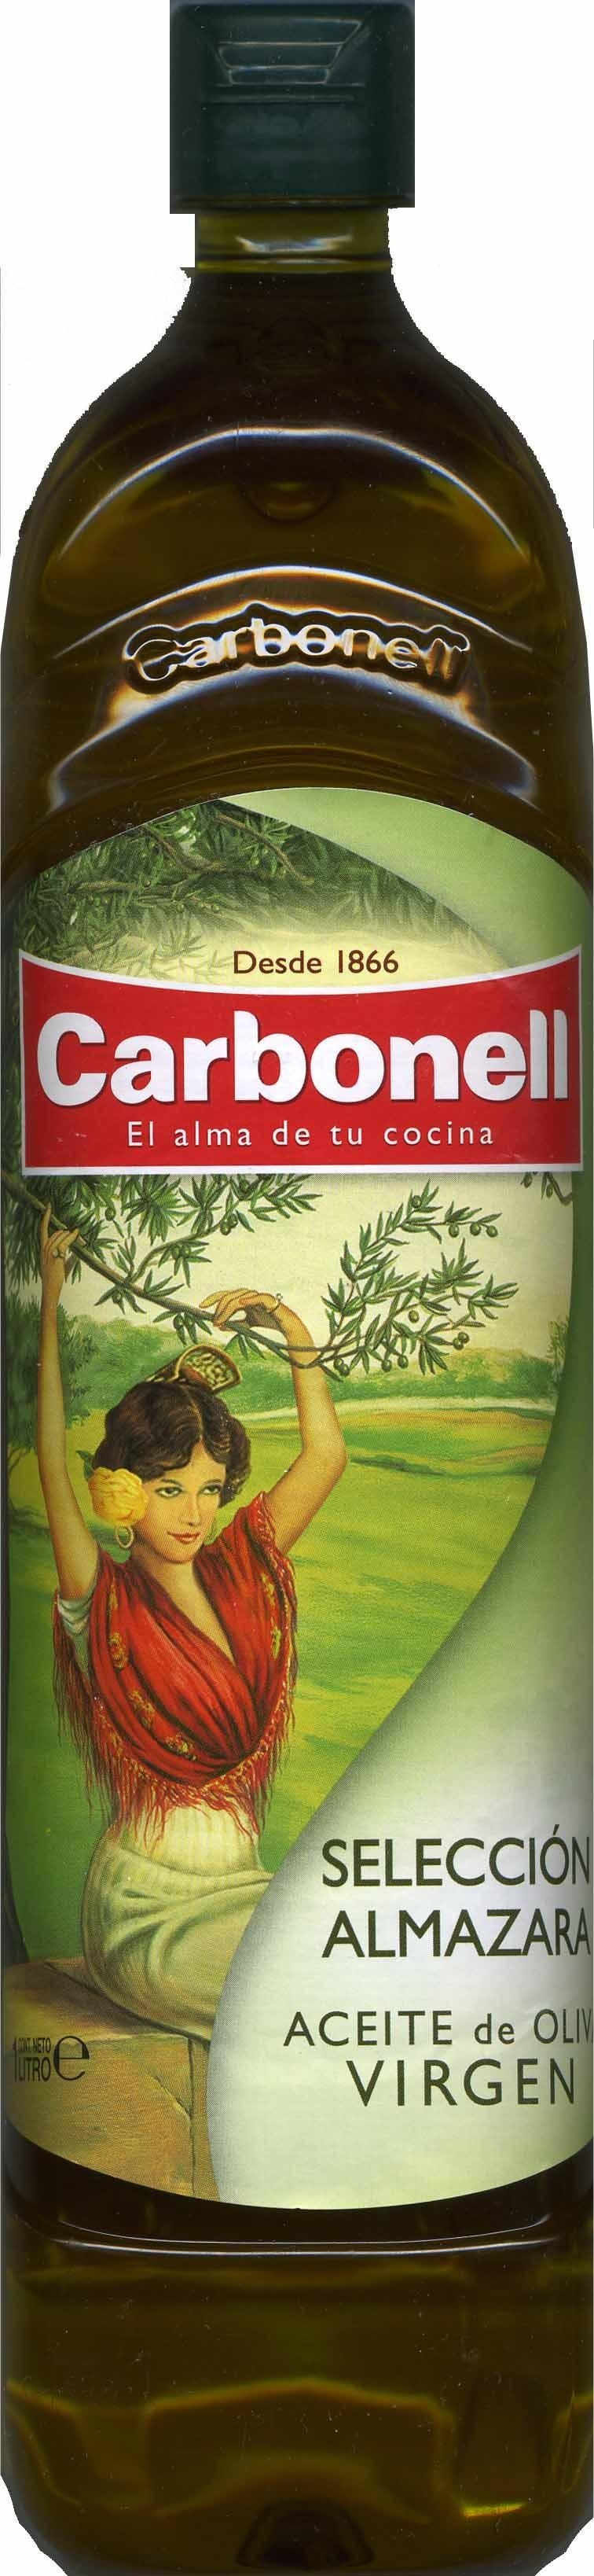 Aceite de oliva virgen Carbonell - Product - es